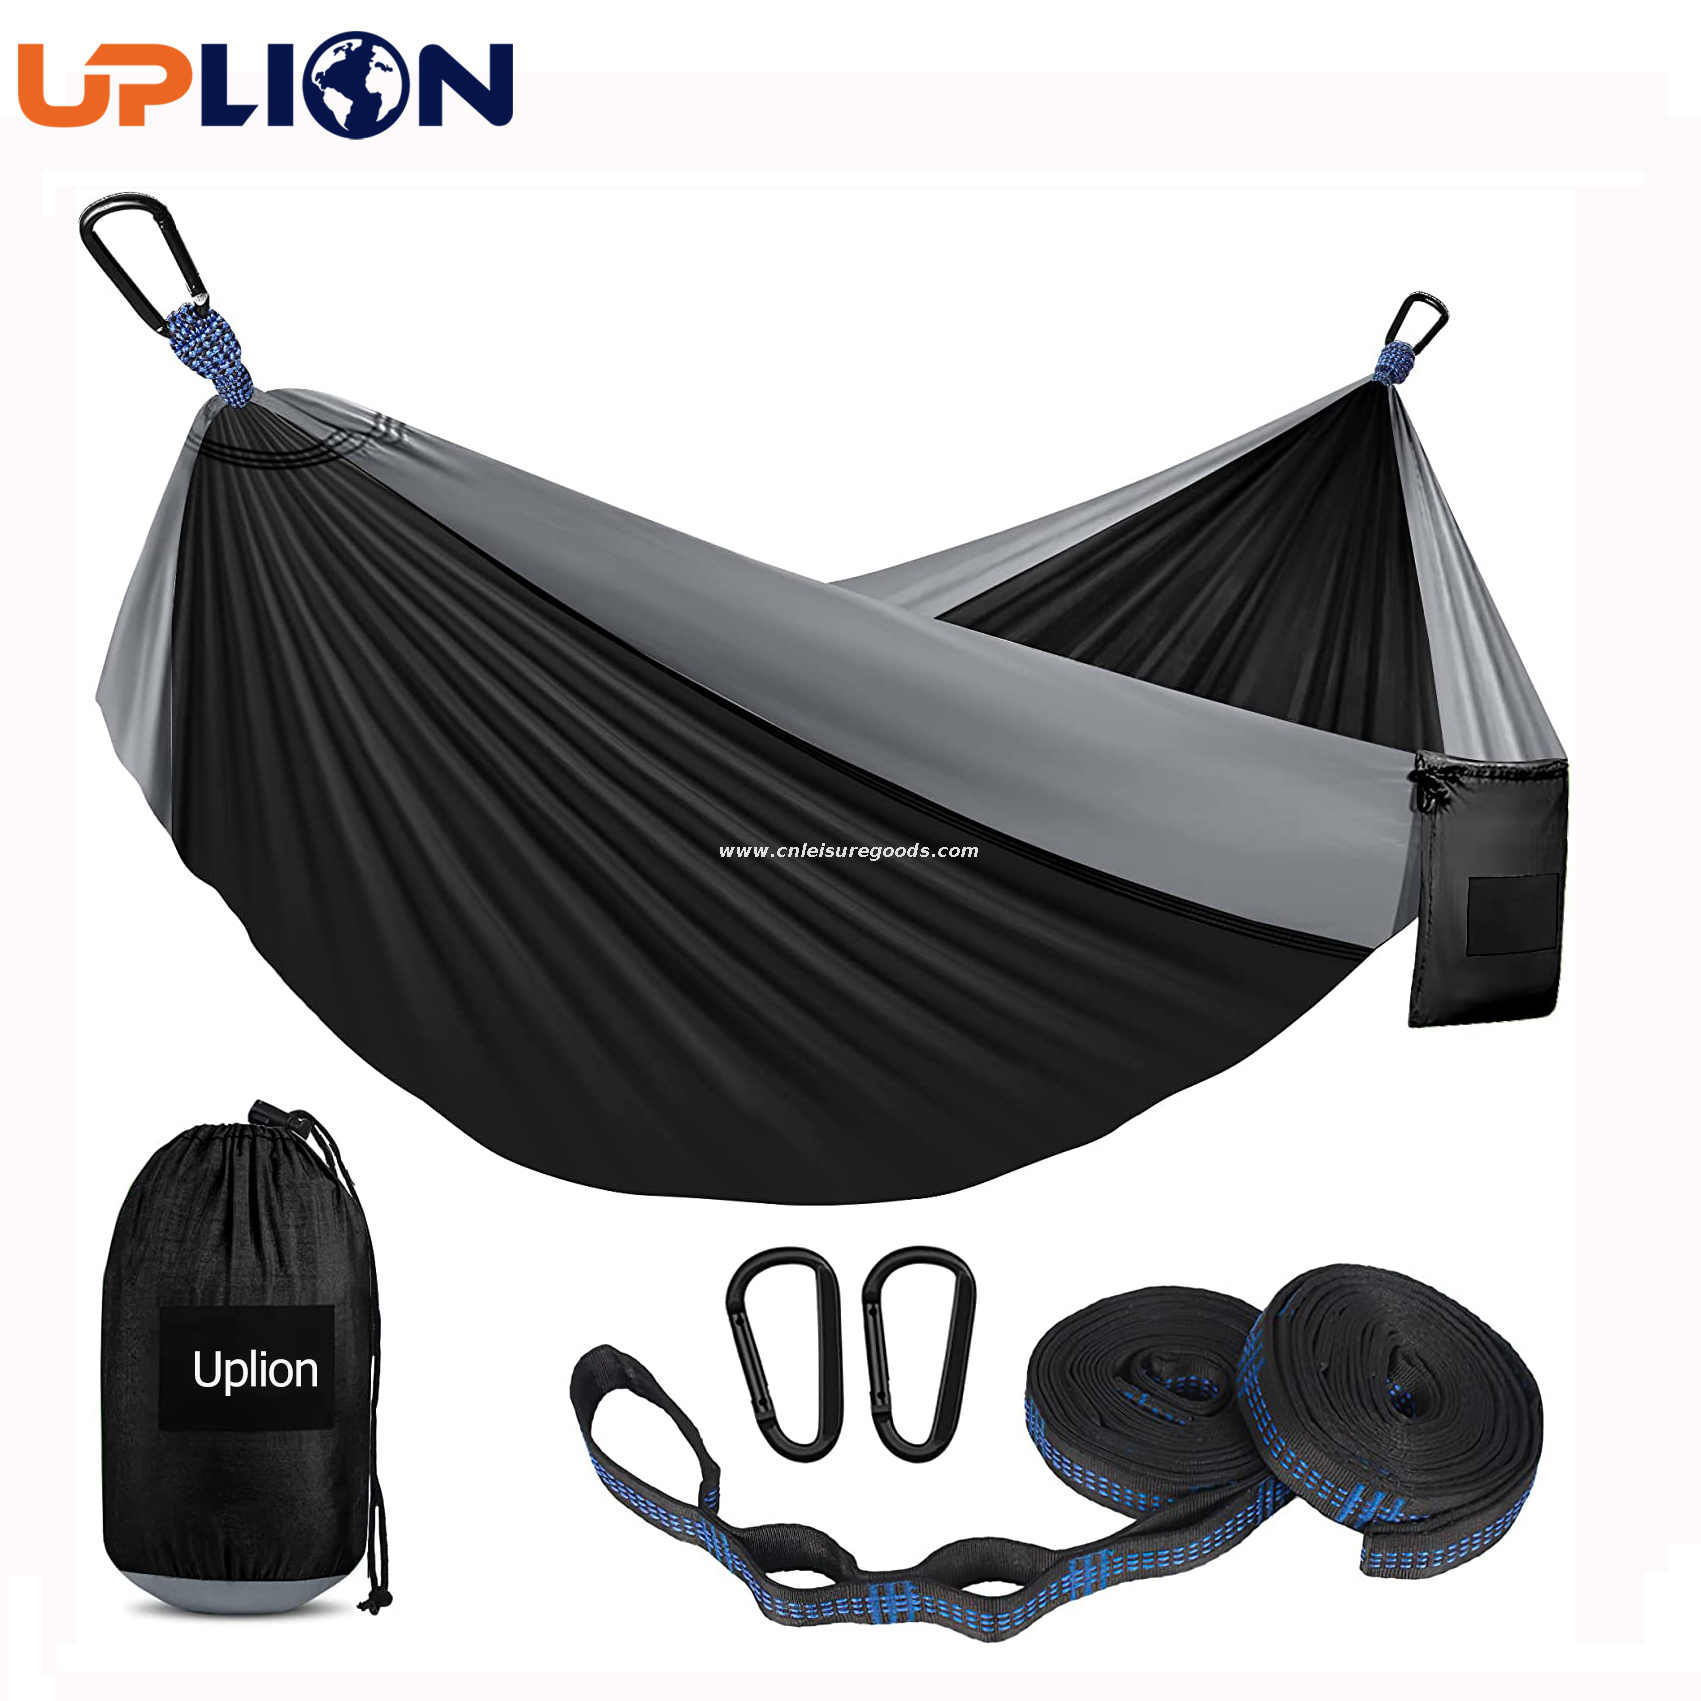 Uplion 210T Nylon Portable Outdoor Parachute Hammock Lightweight Camping Hammock